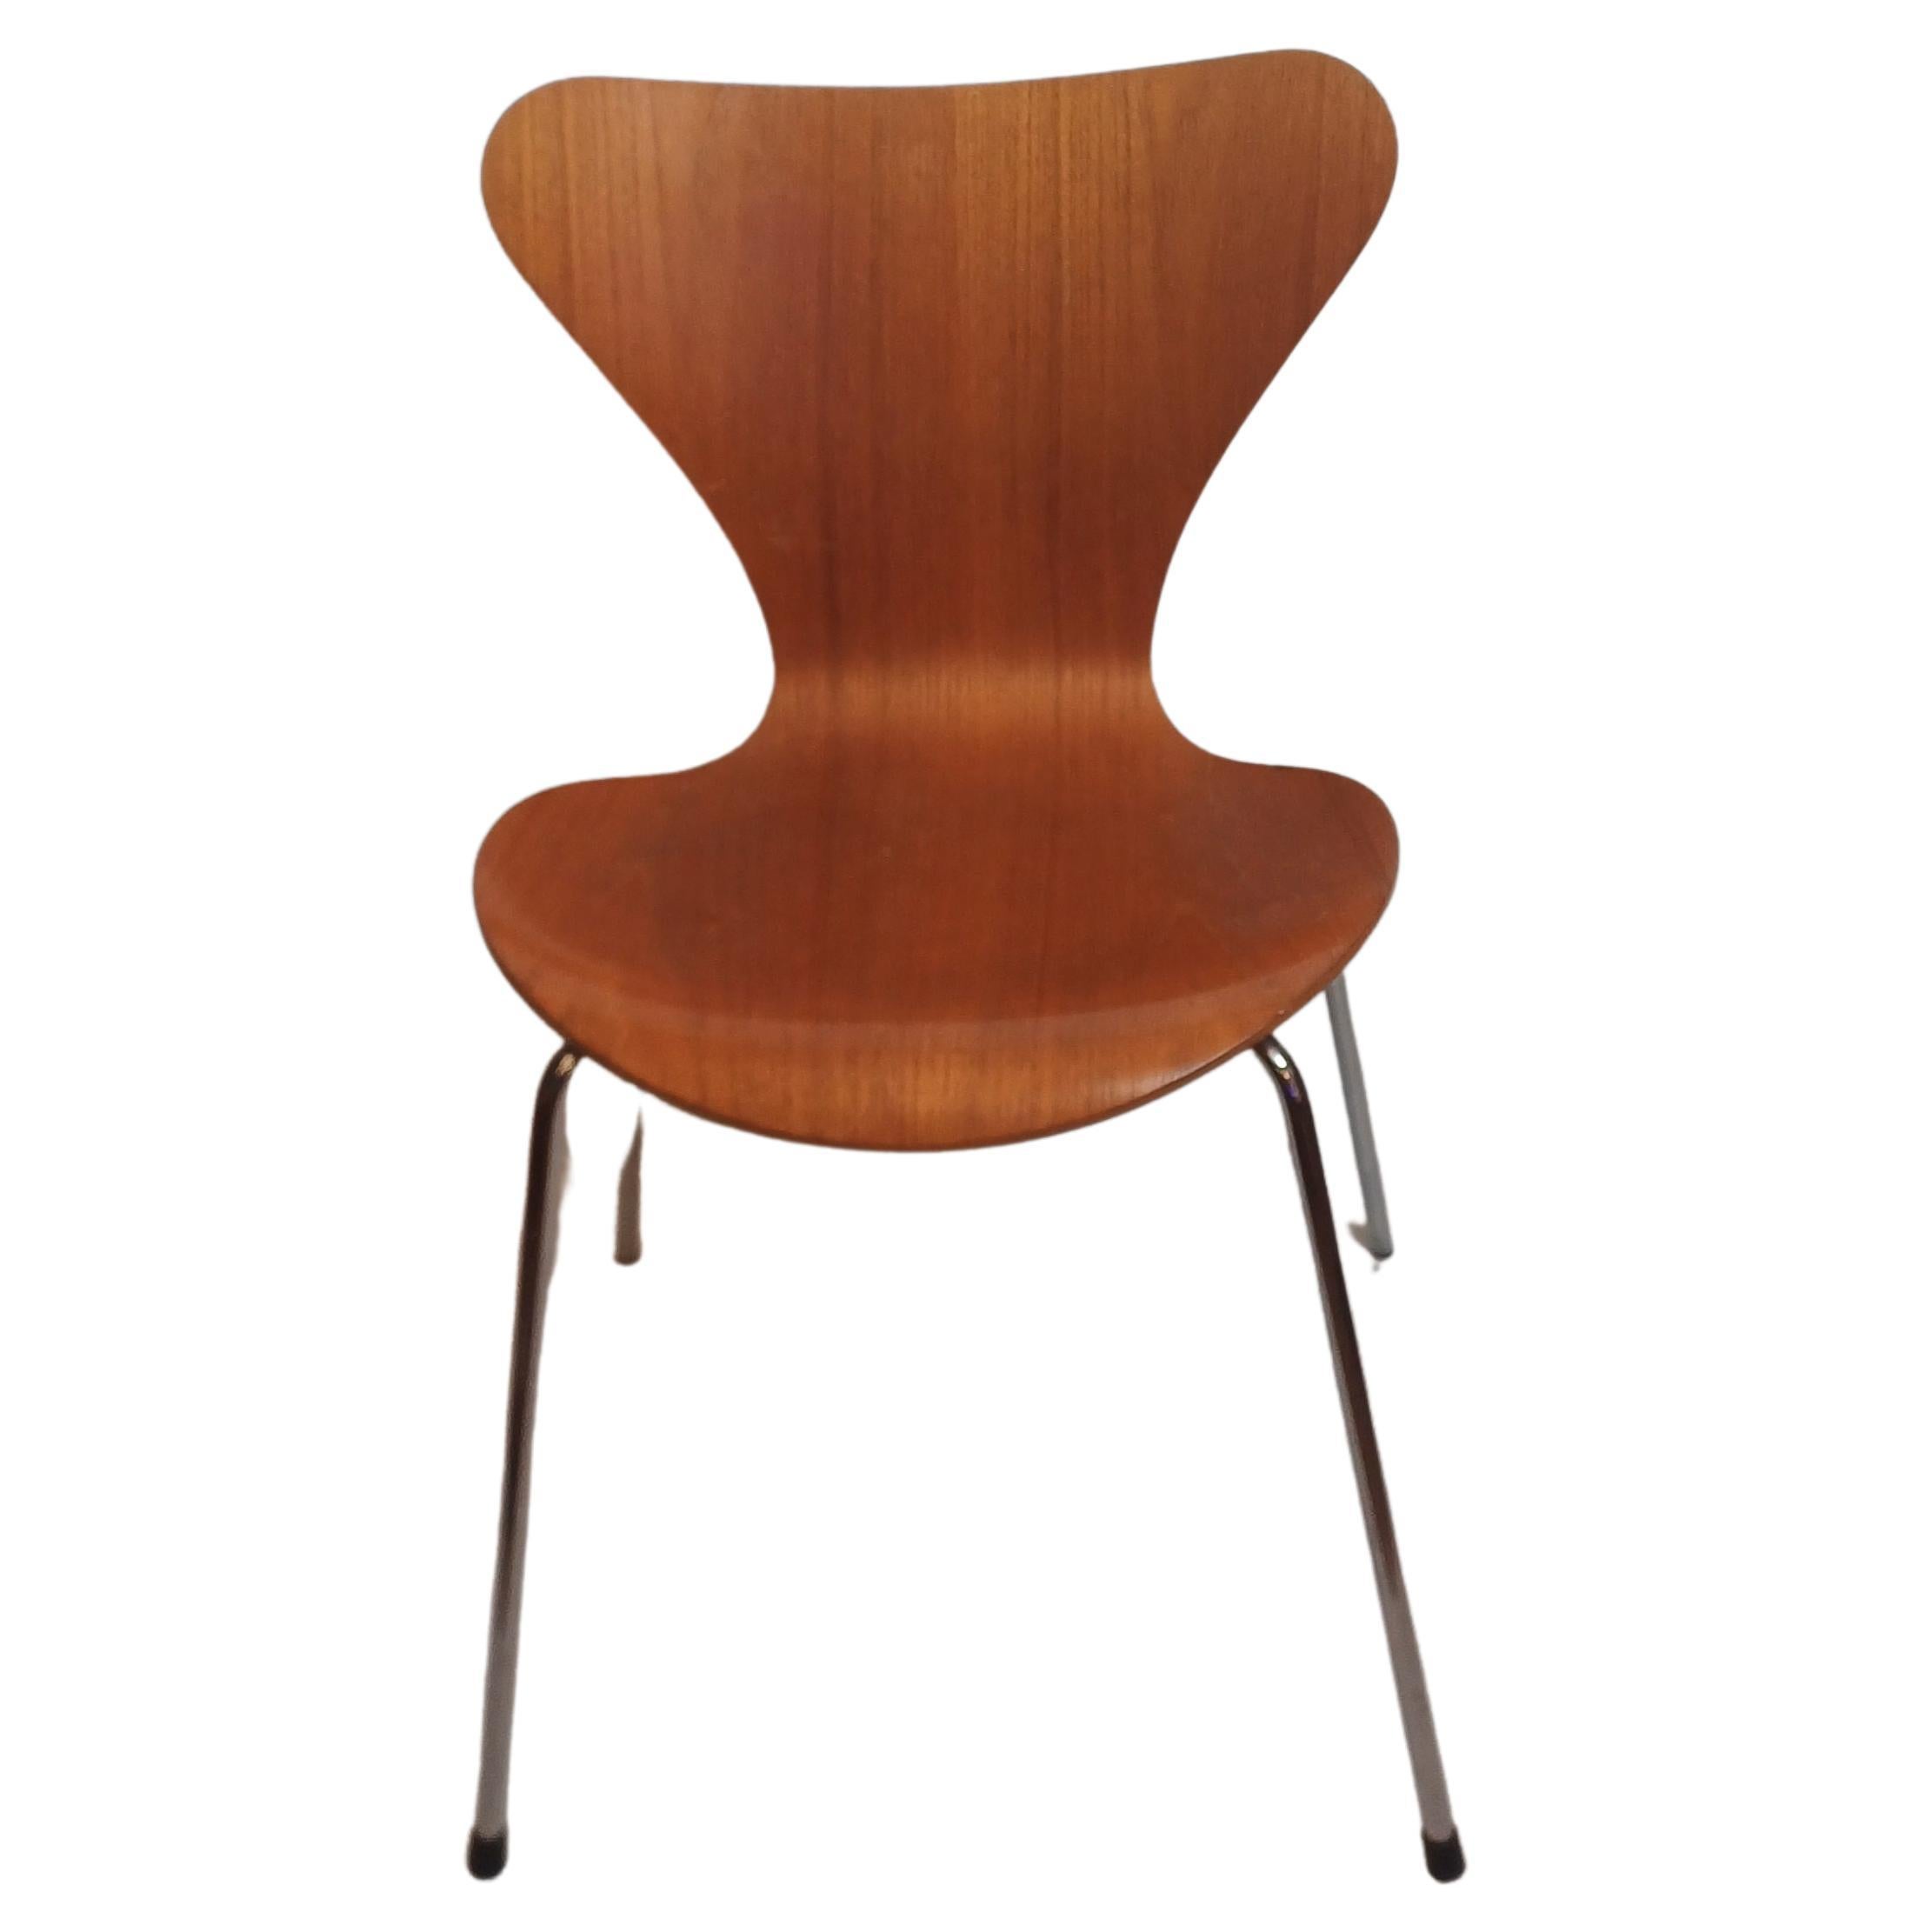 Chaise en bois (1) Série 7 designer Arne Jacobsen production Fritz Hansen 1992 en vente